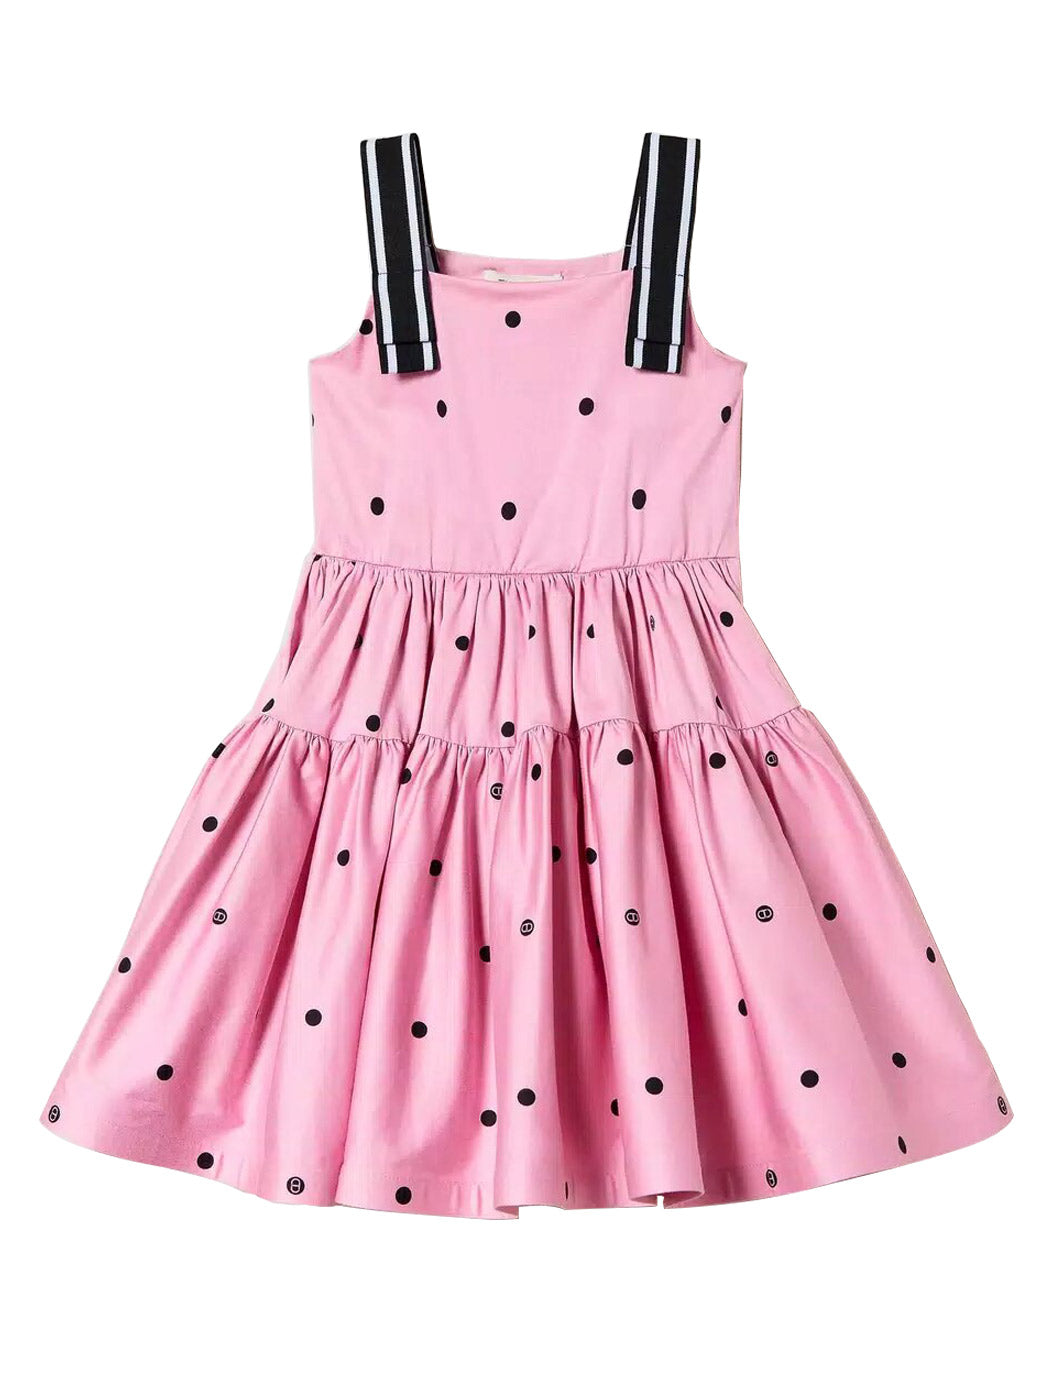 Twinset girls’ short polka-dot dress with flounces